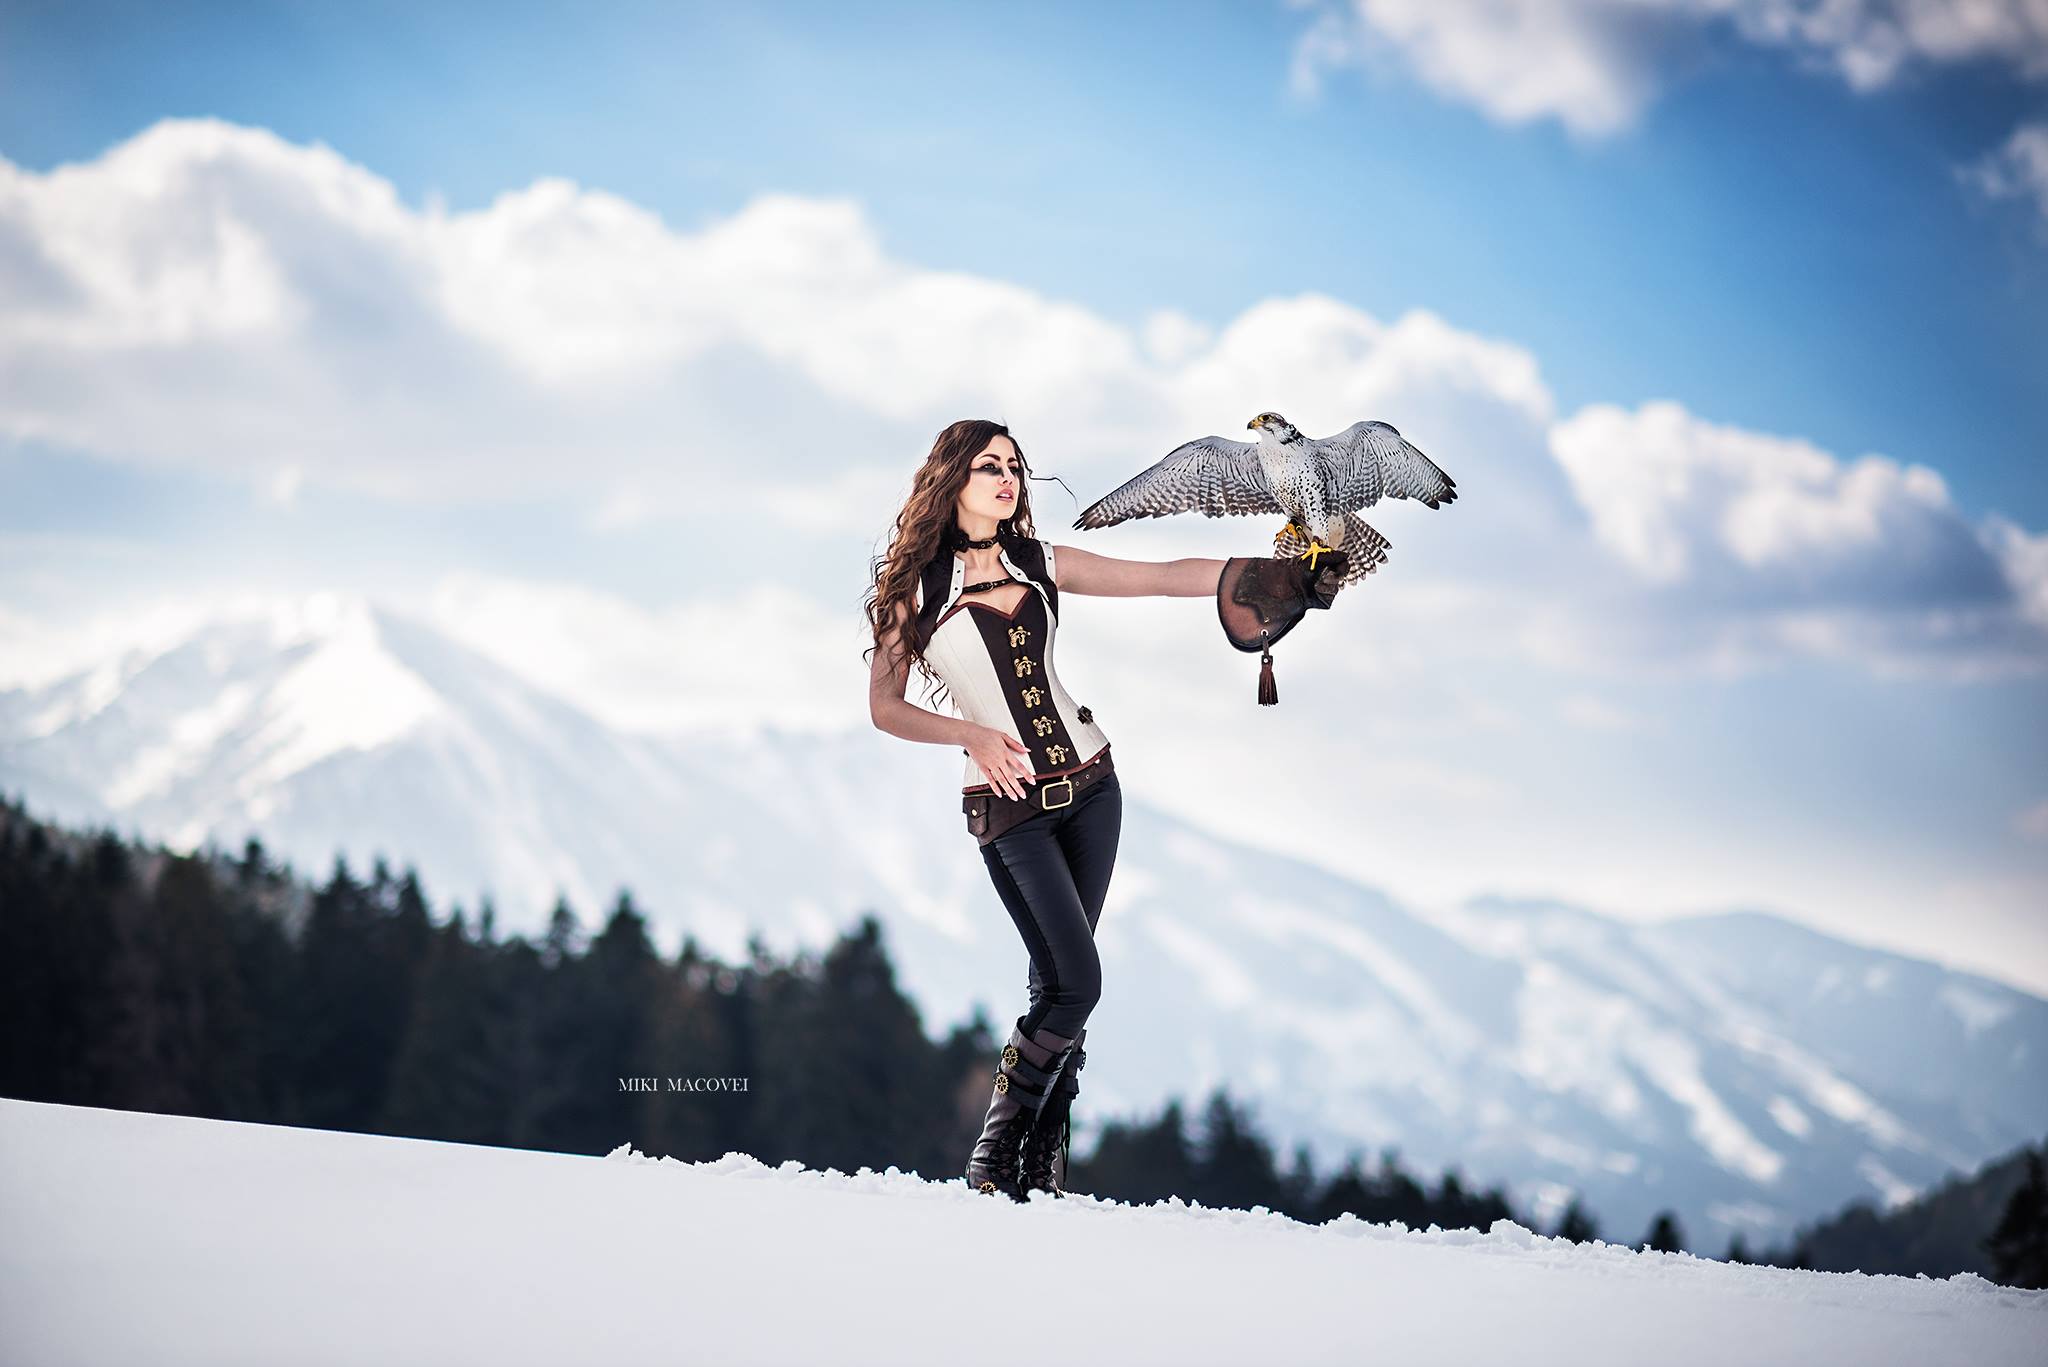 People 2048x1367 fantasy girl nature birds women outdoors snow Miki Macovei women corset